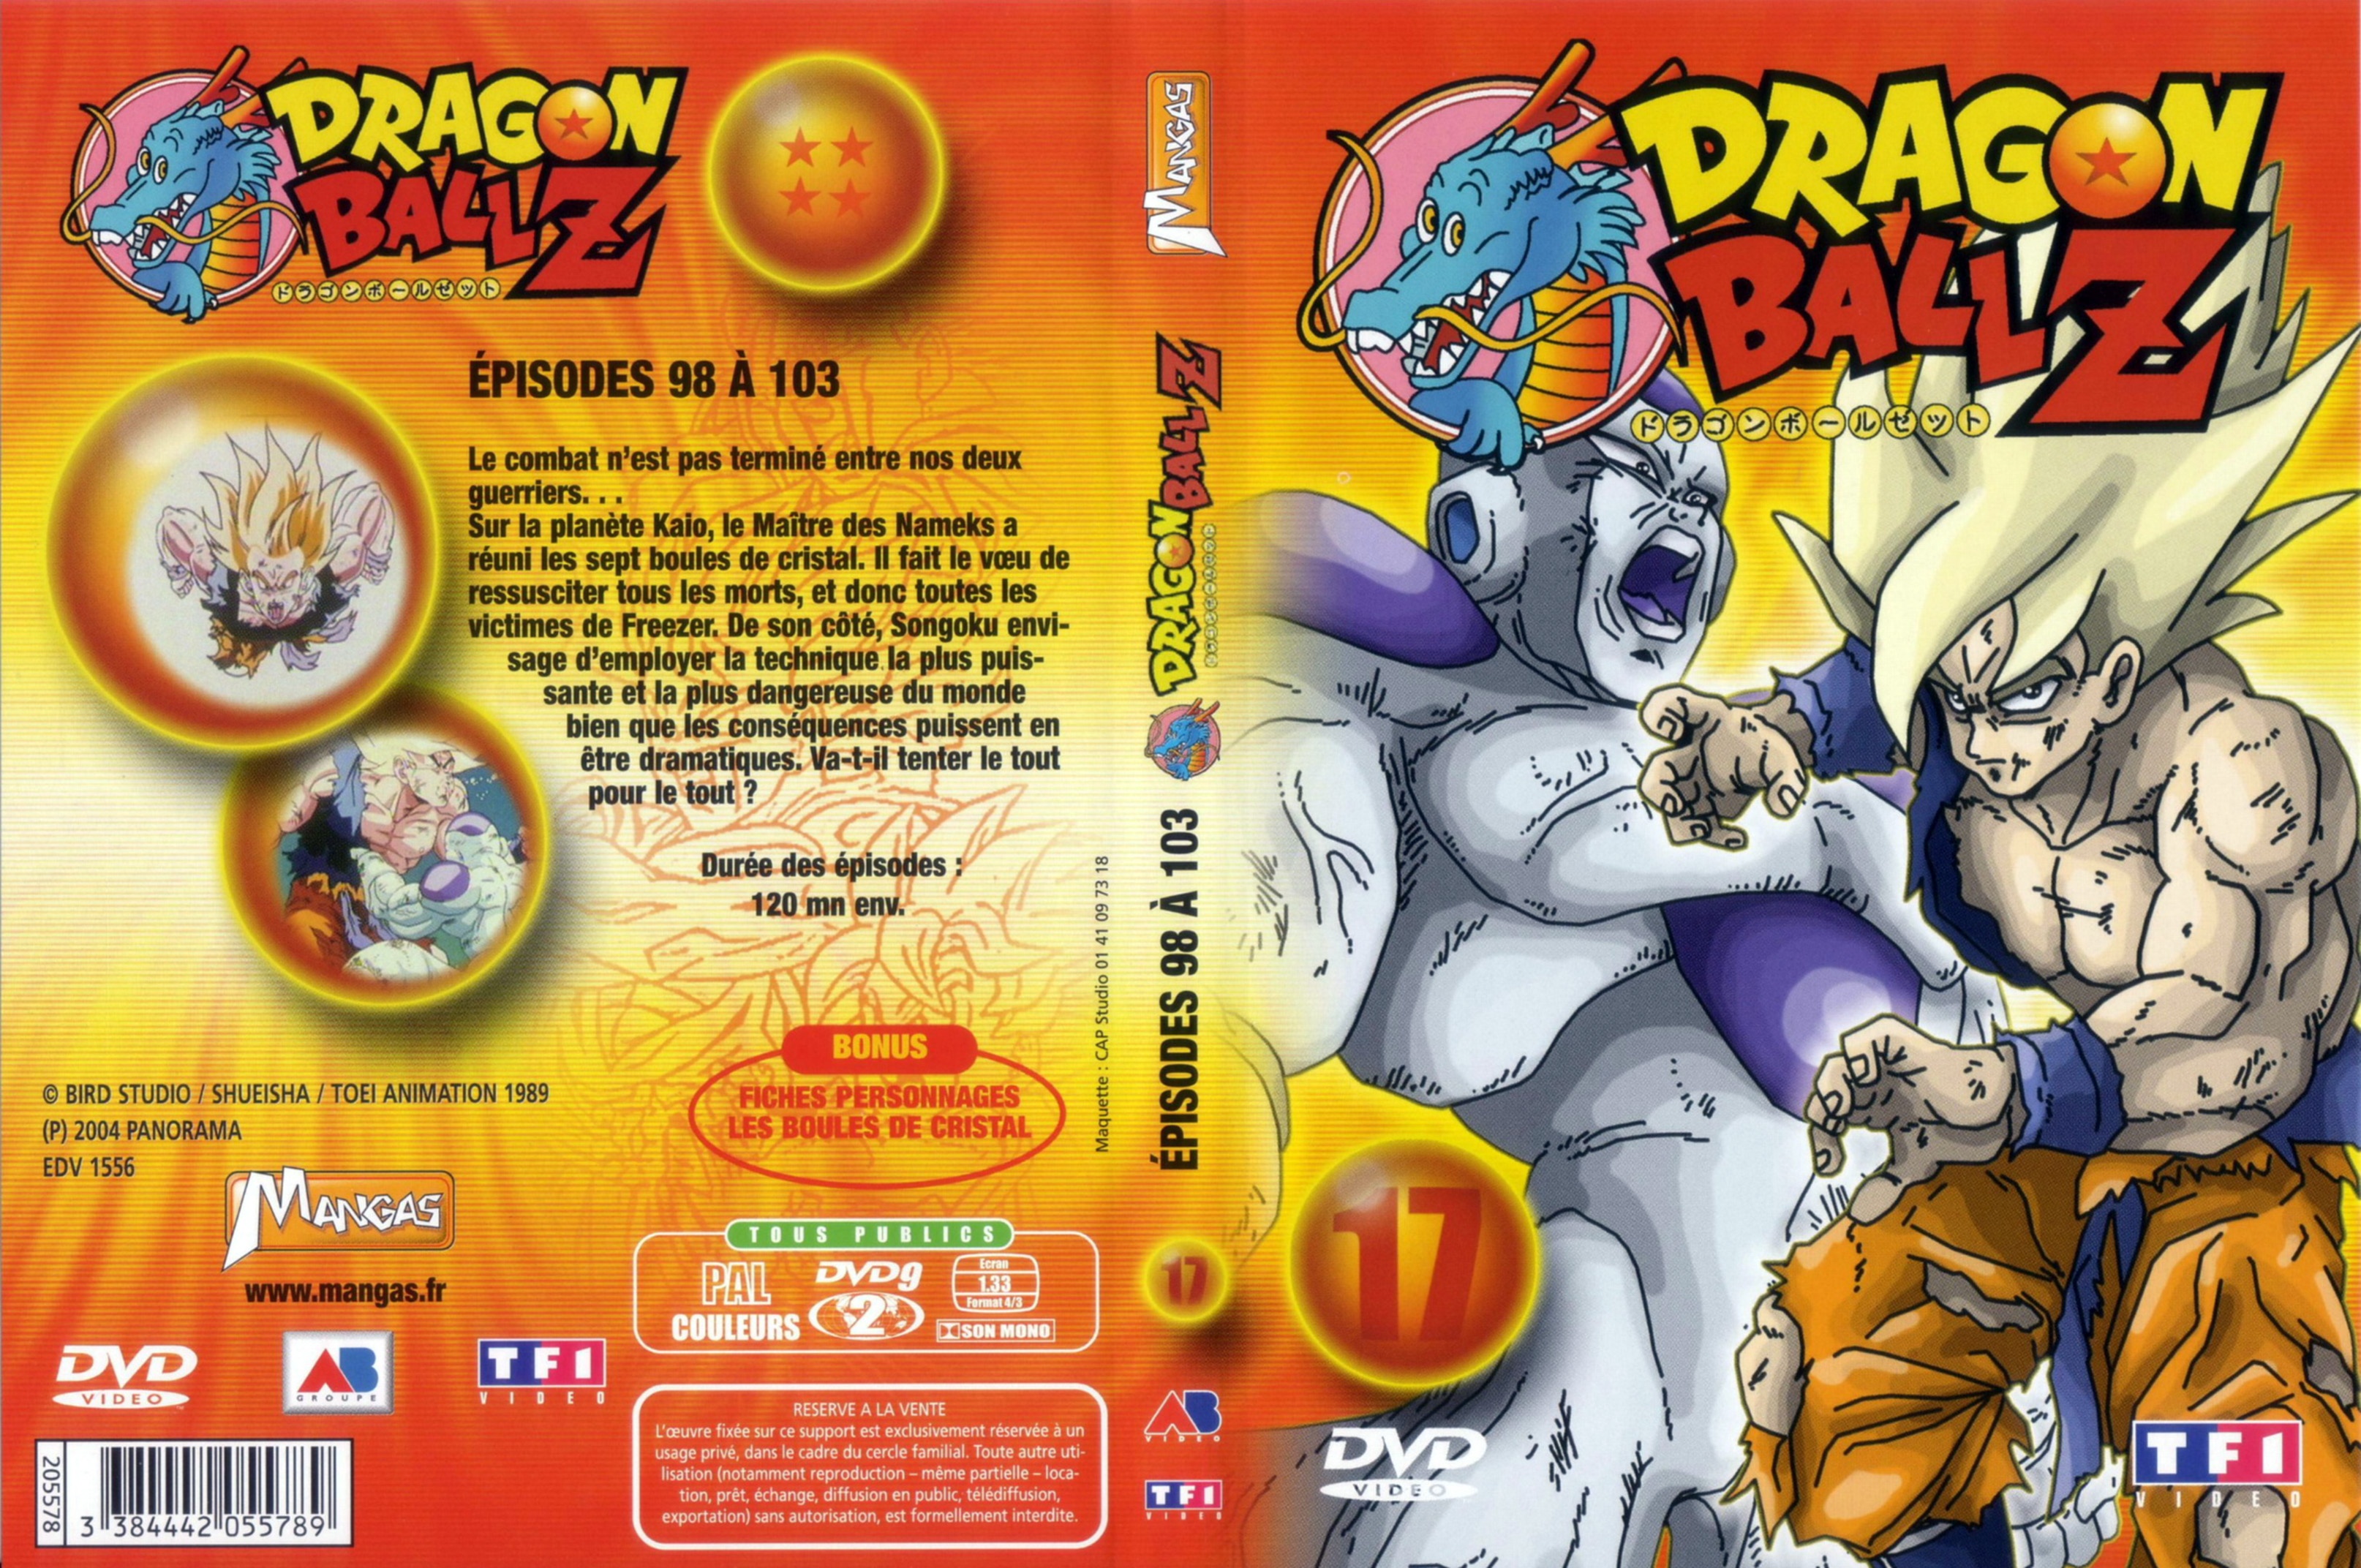 Jaquette DVD Dragon ball Z vol 17